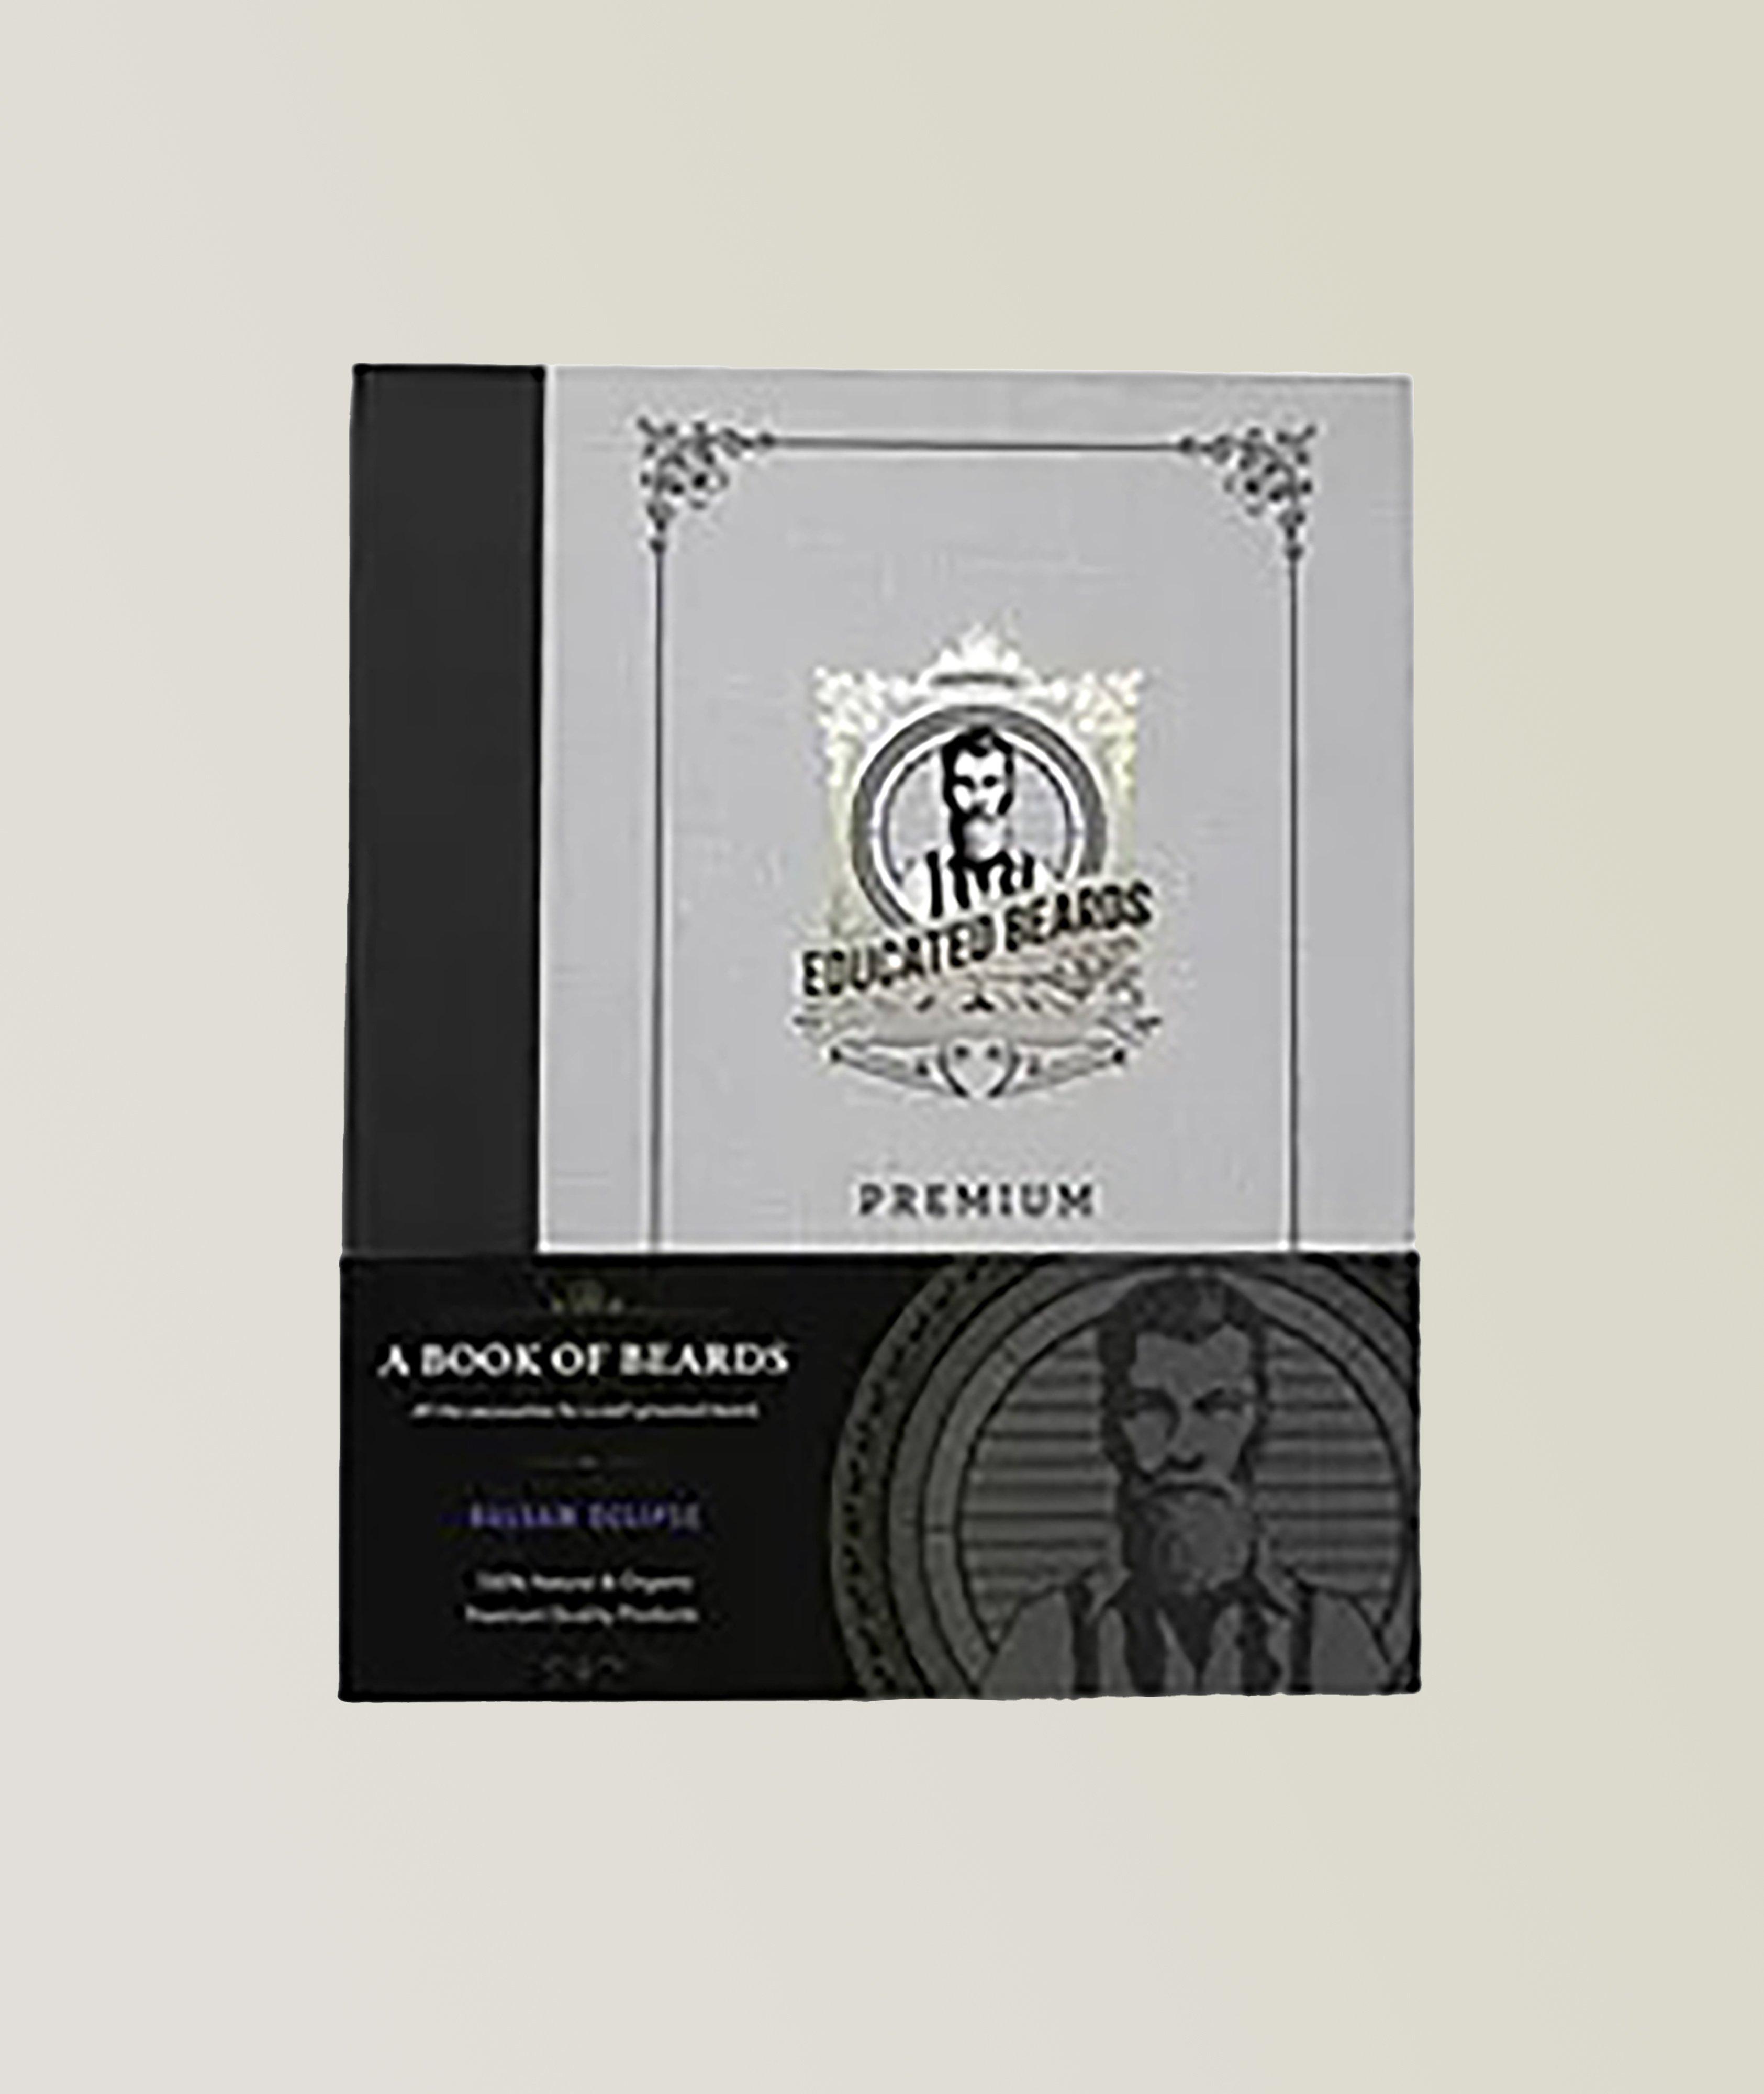 Ensemble A Book of Beards, fragrance Balsam Eclipse image 0